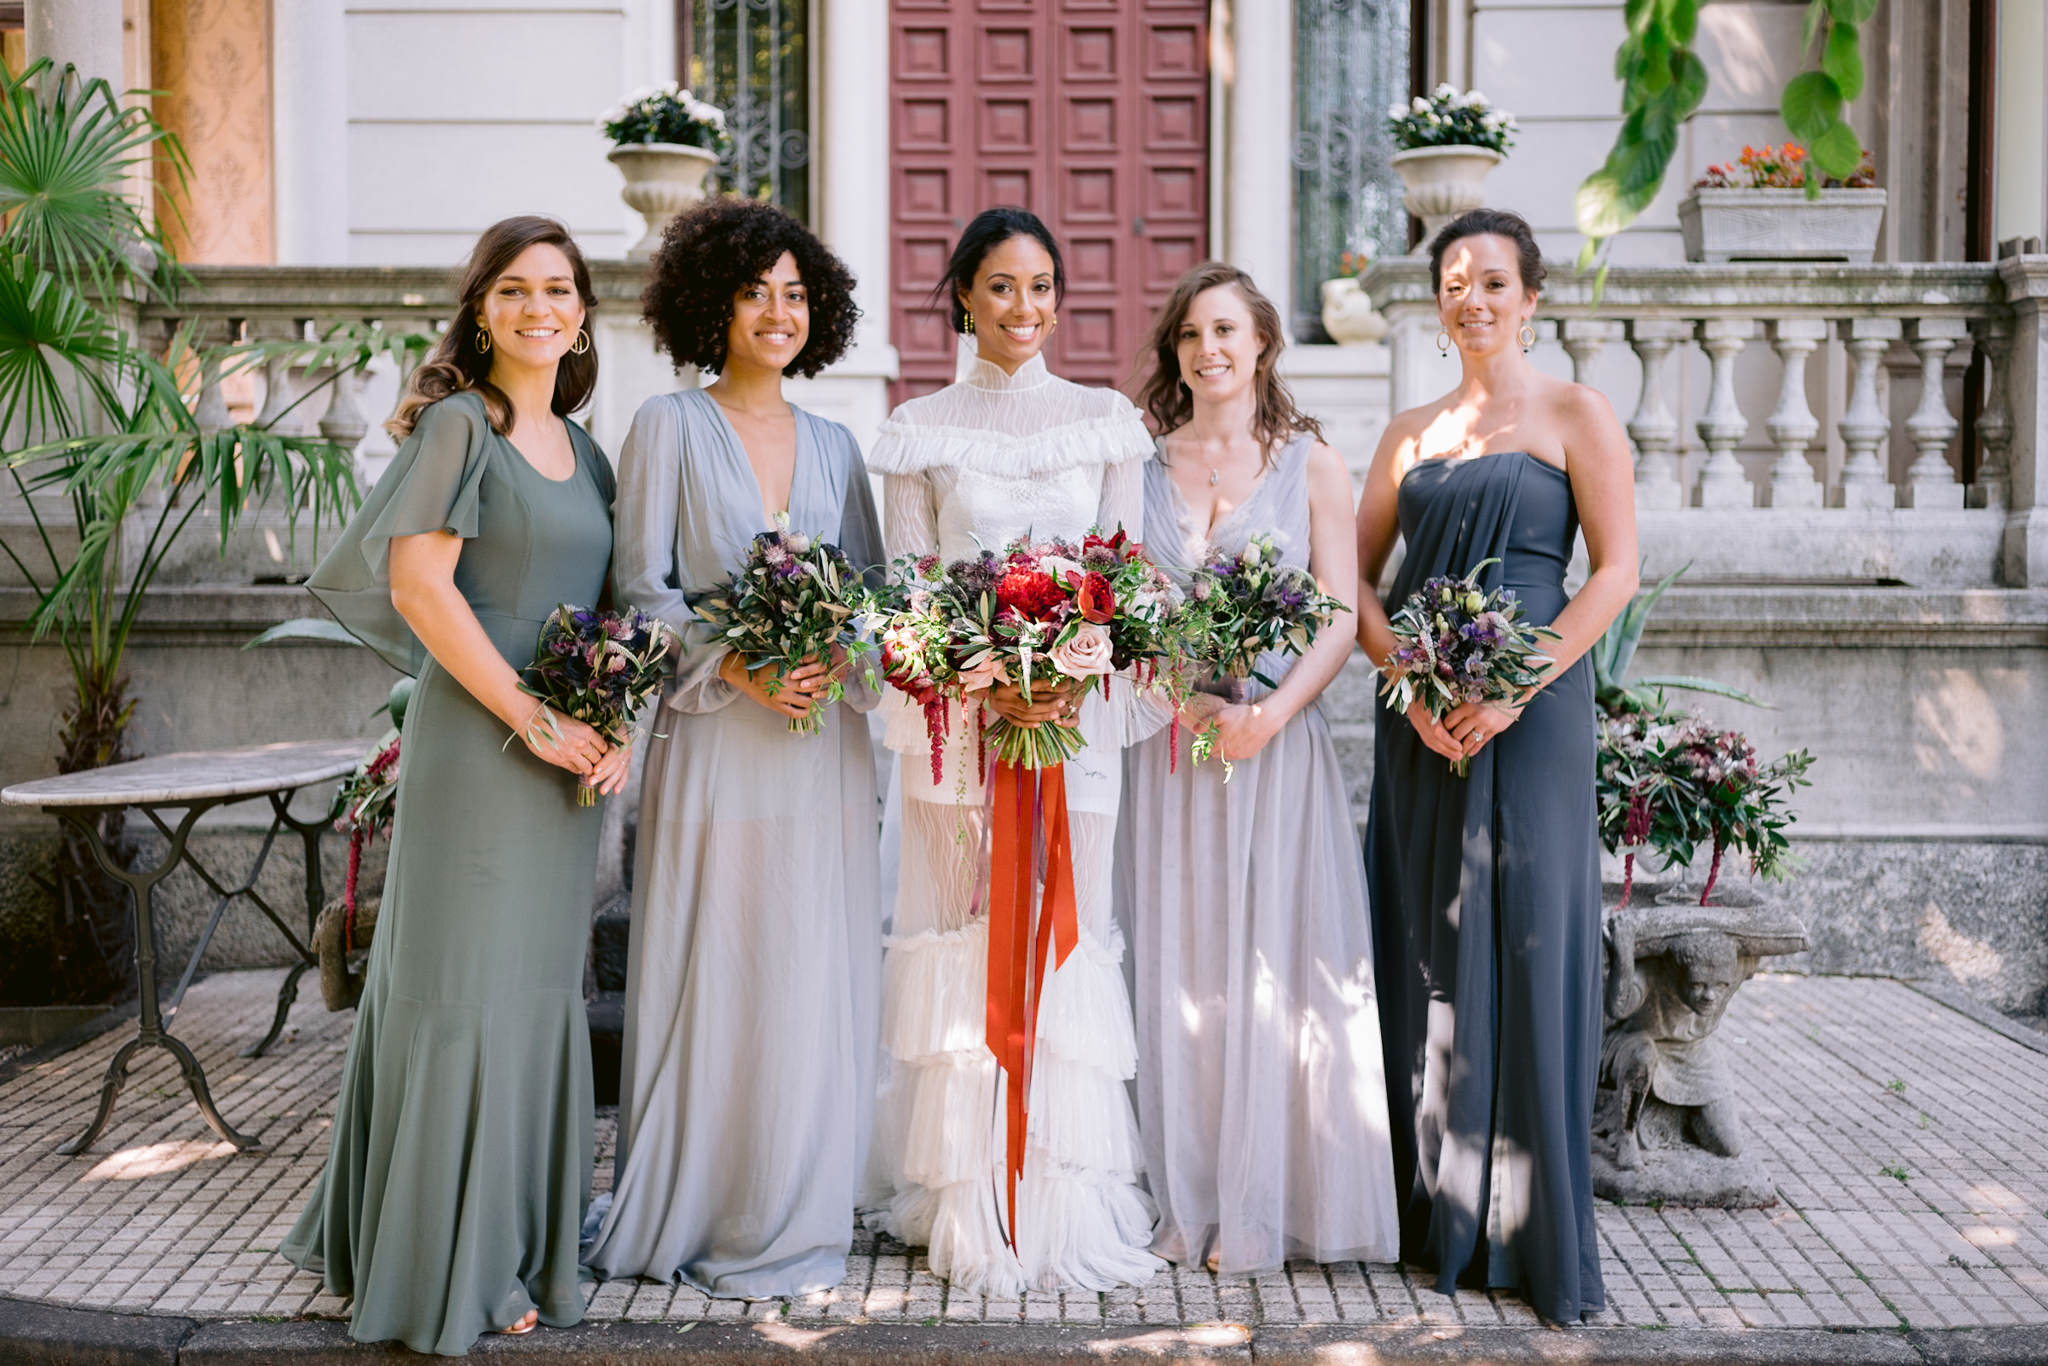 Lake Como, Italy, wedding with mismatched bridesmaid dresses